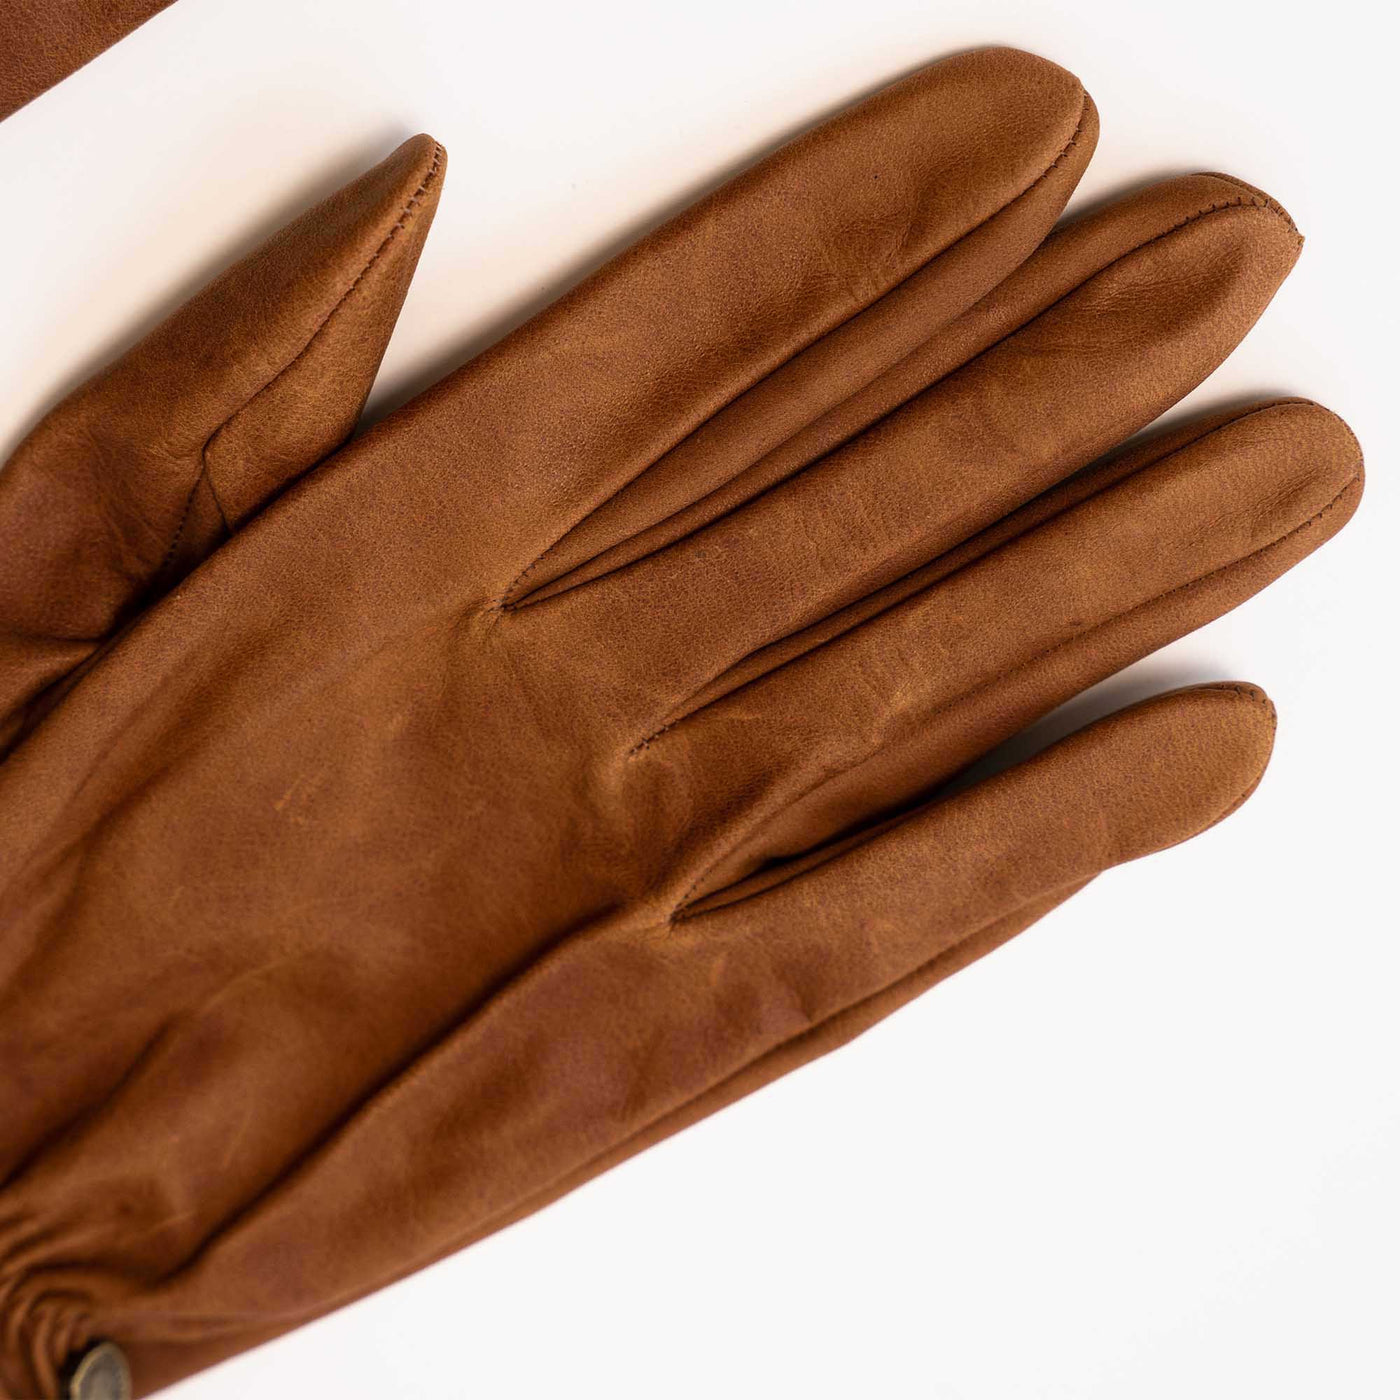 Shangri La - “Bandit” Nubuck Horsehide Gloves - Brown